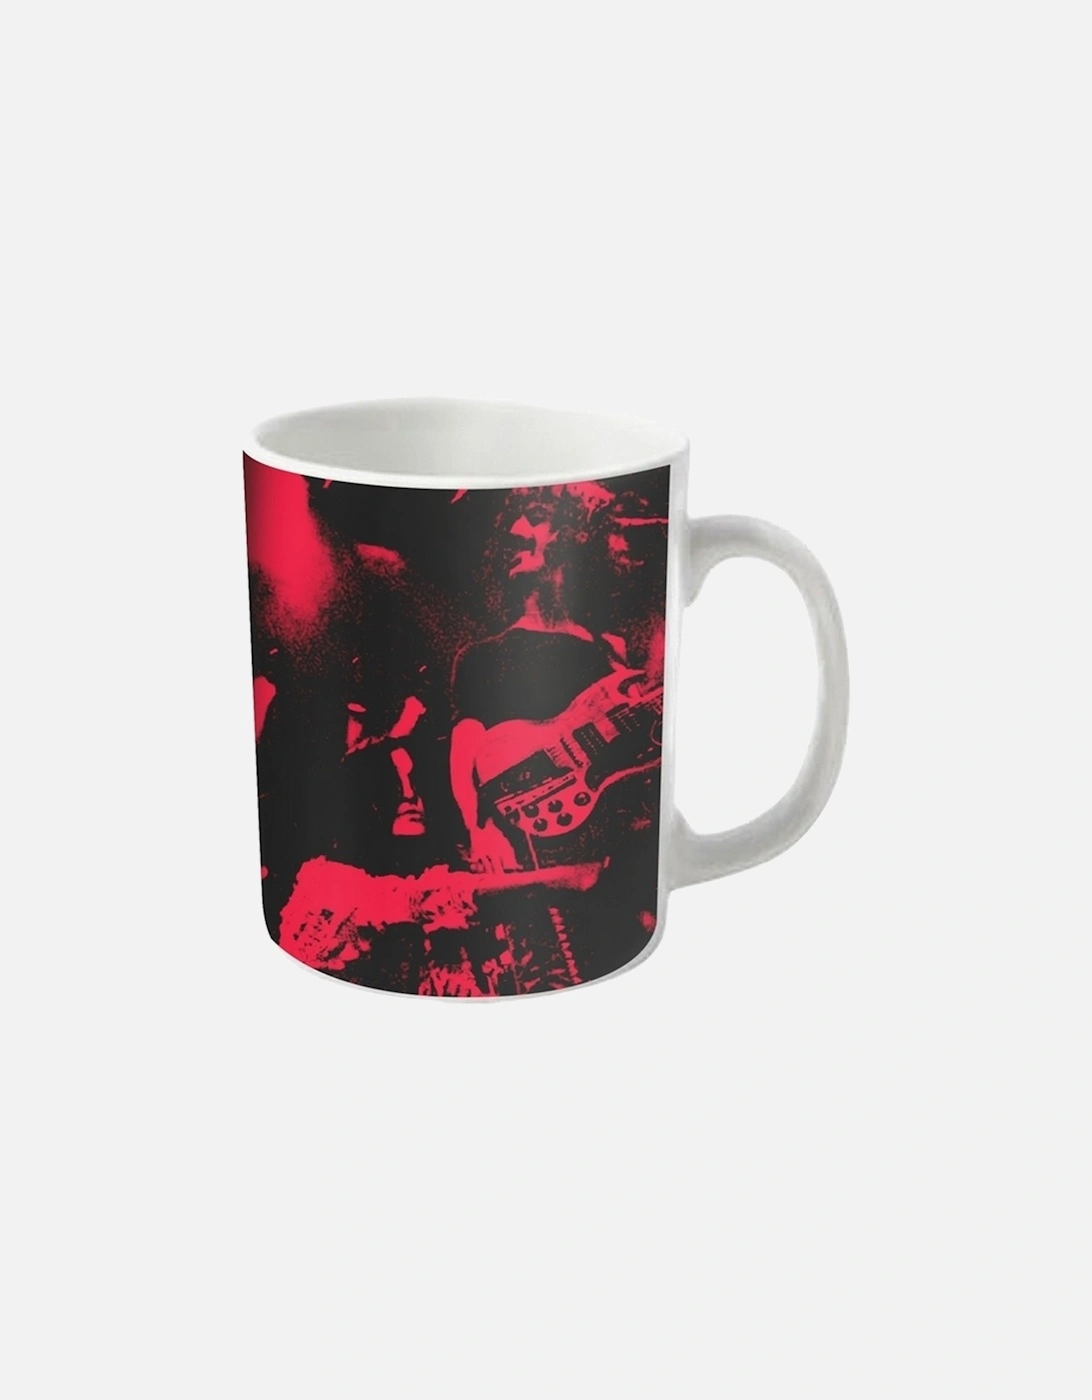 Roxy & Elsewhere Album Mug